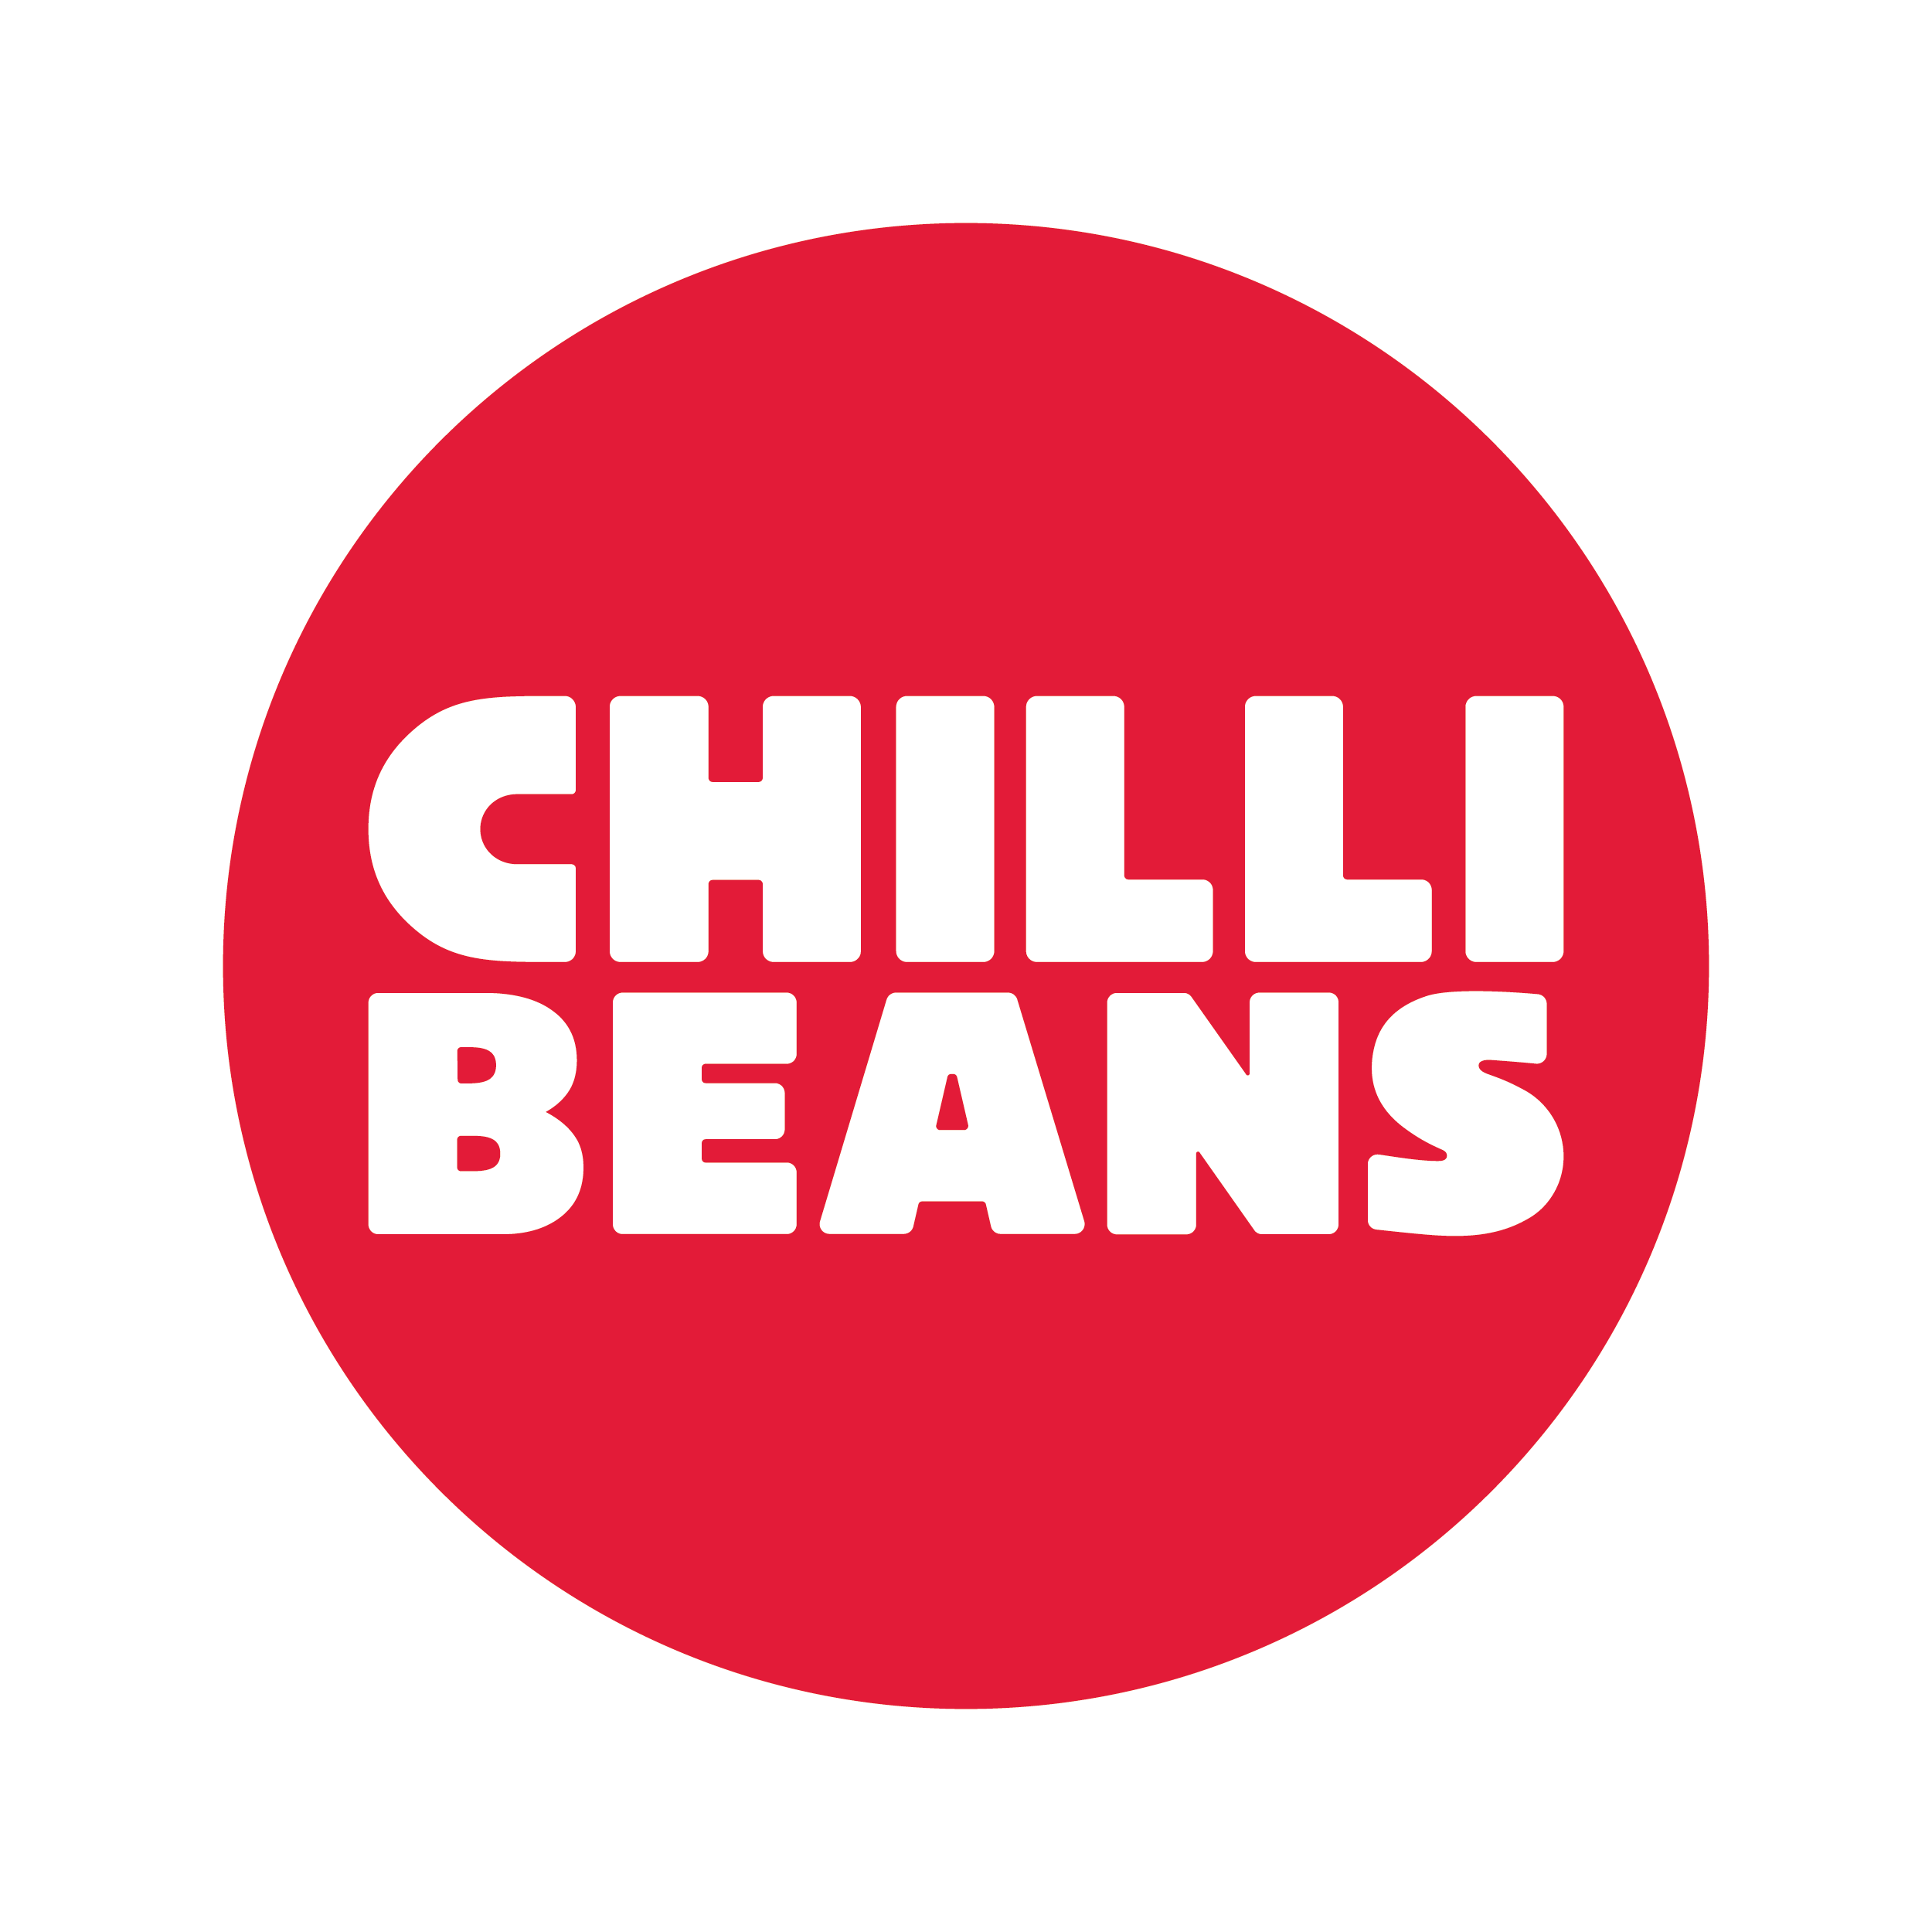 Chilli BeansChilli Beans